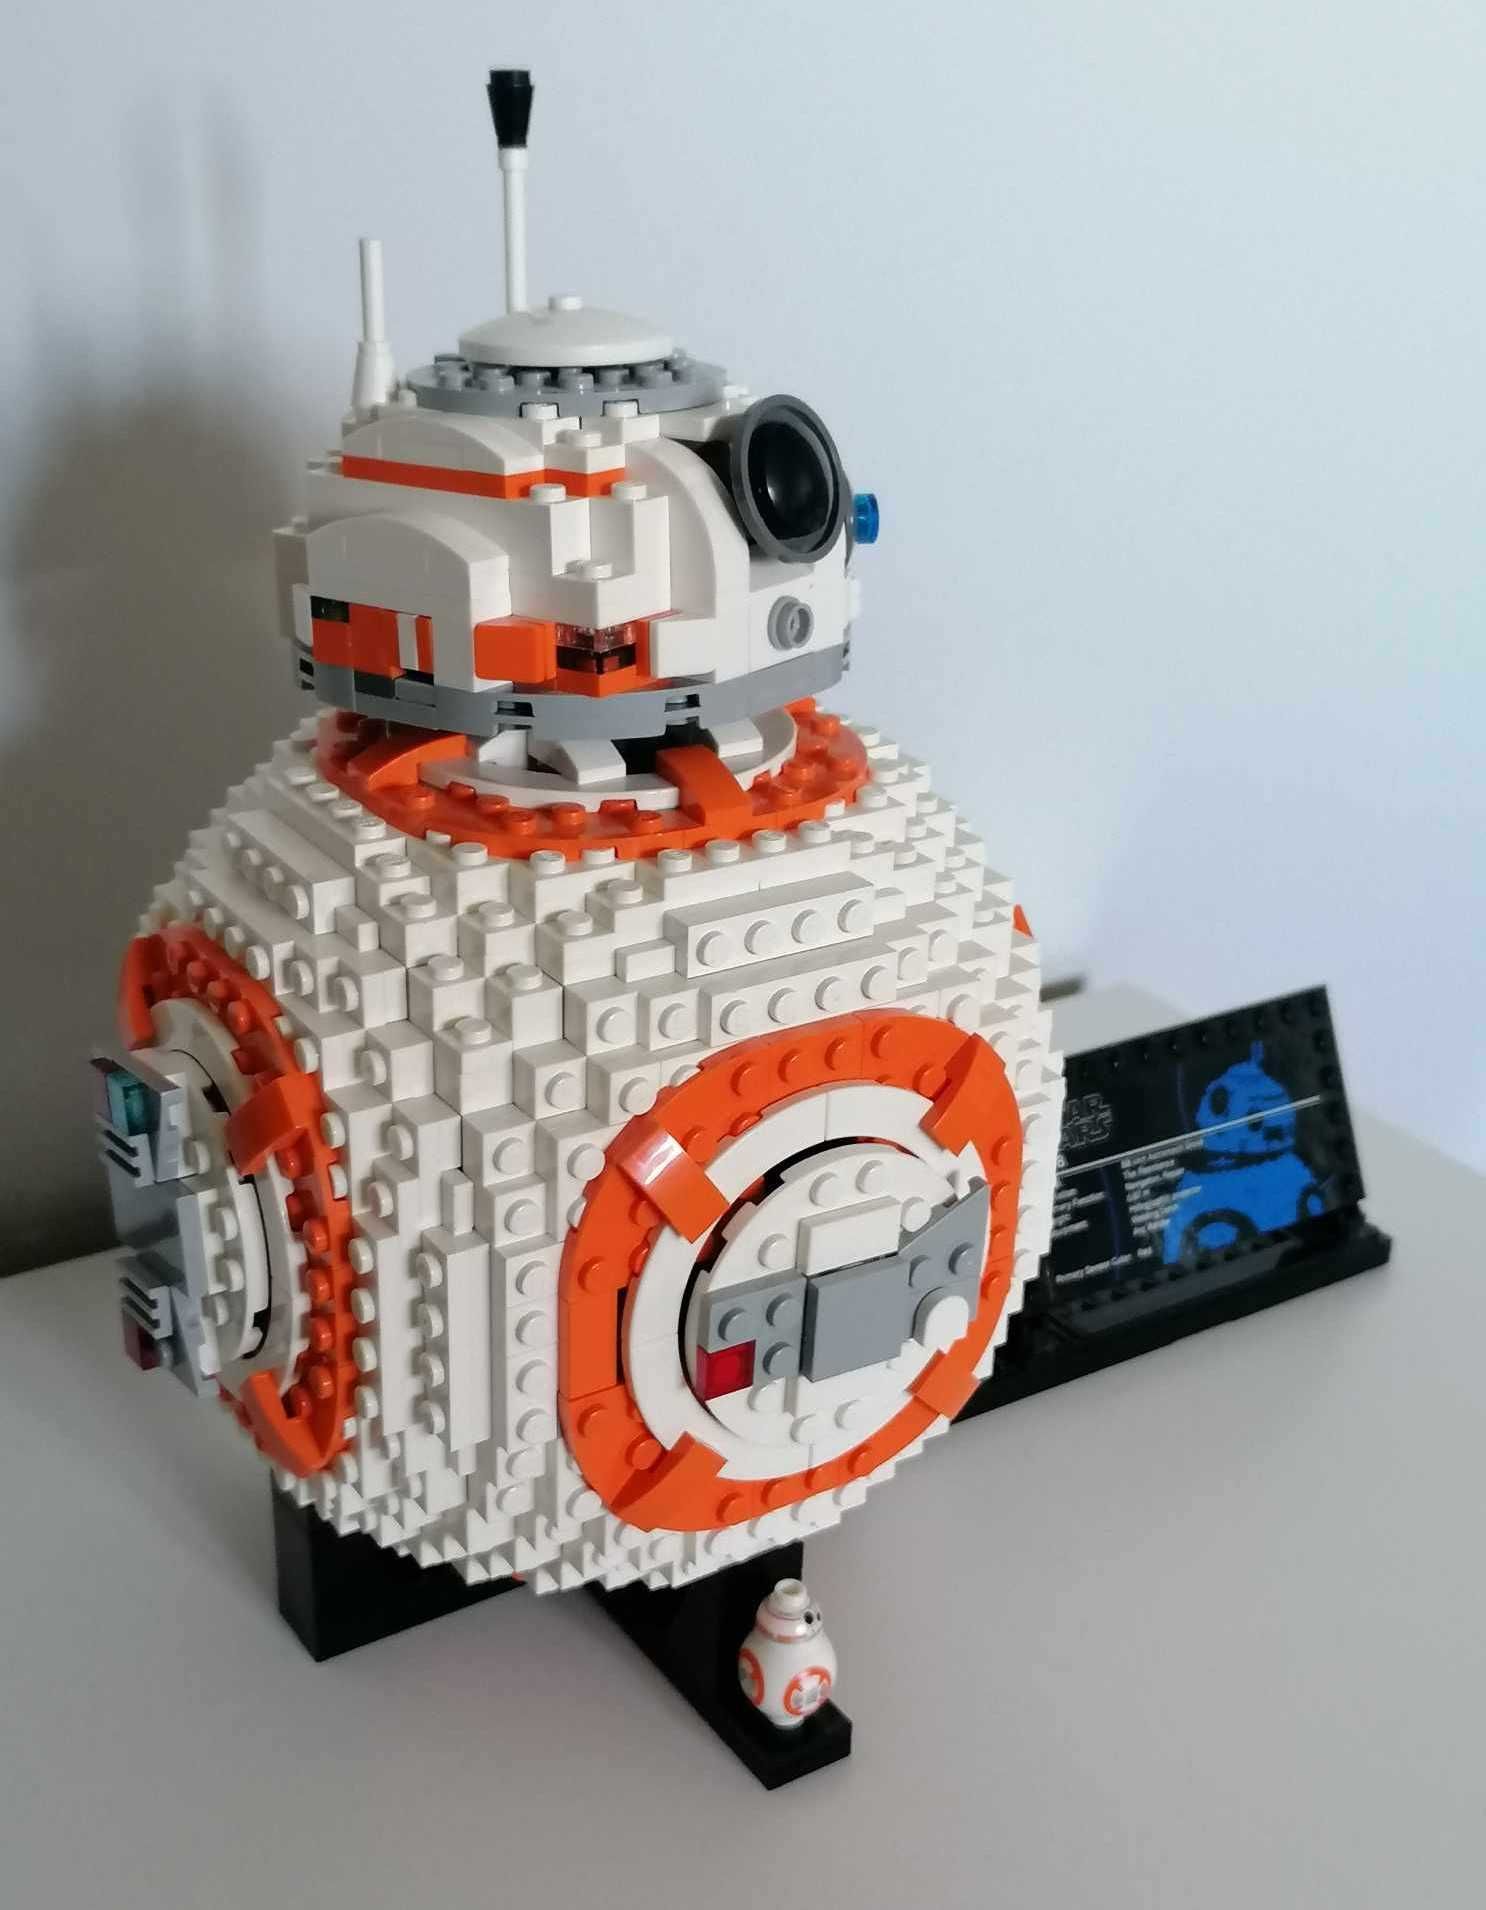 Lego Star Wars zestaw 75187 BB-8